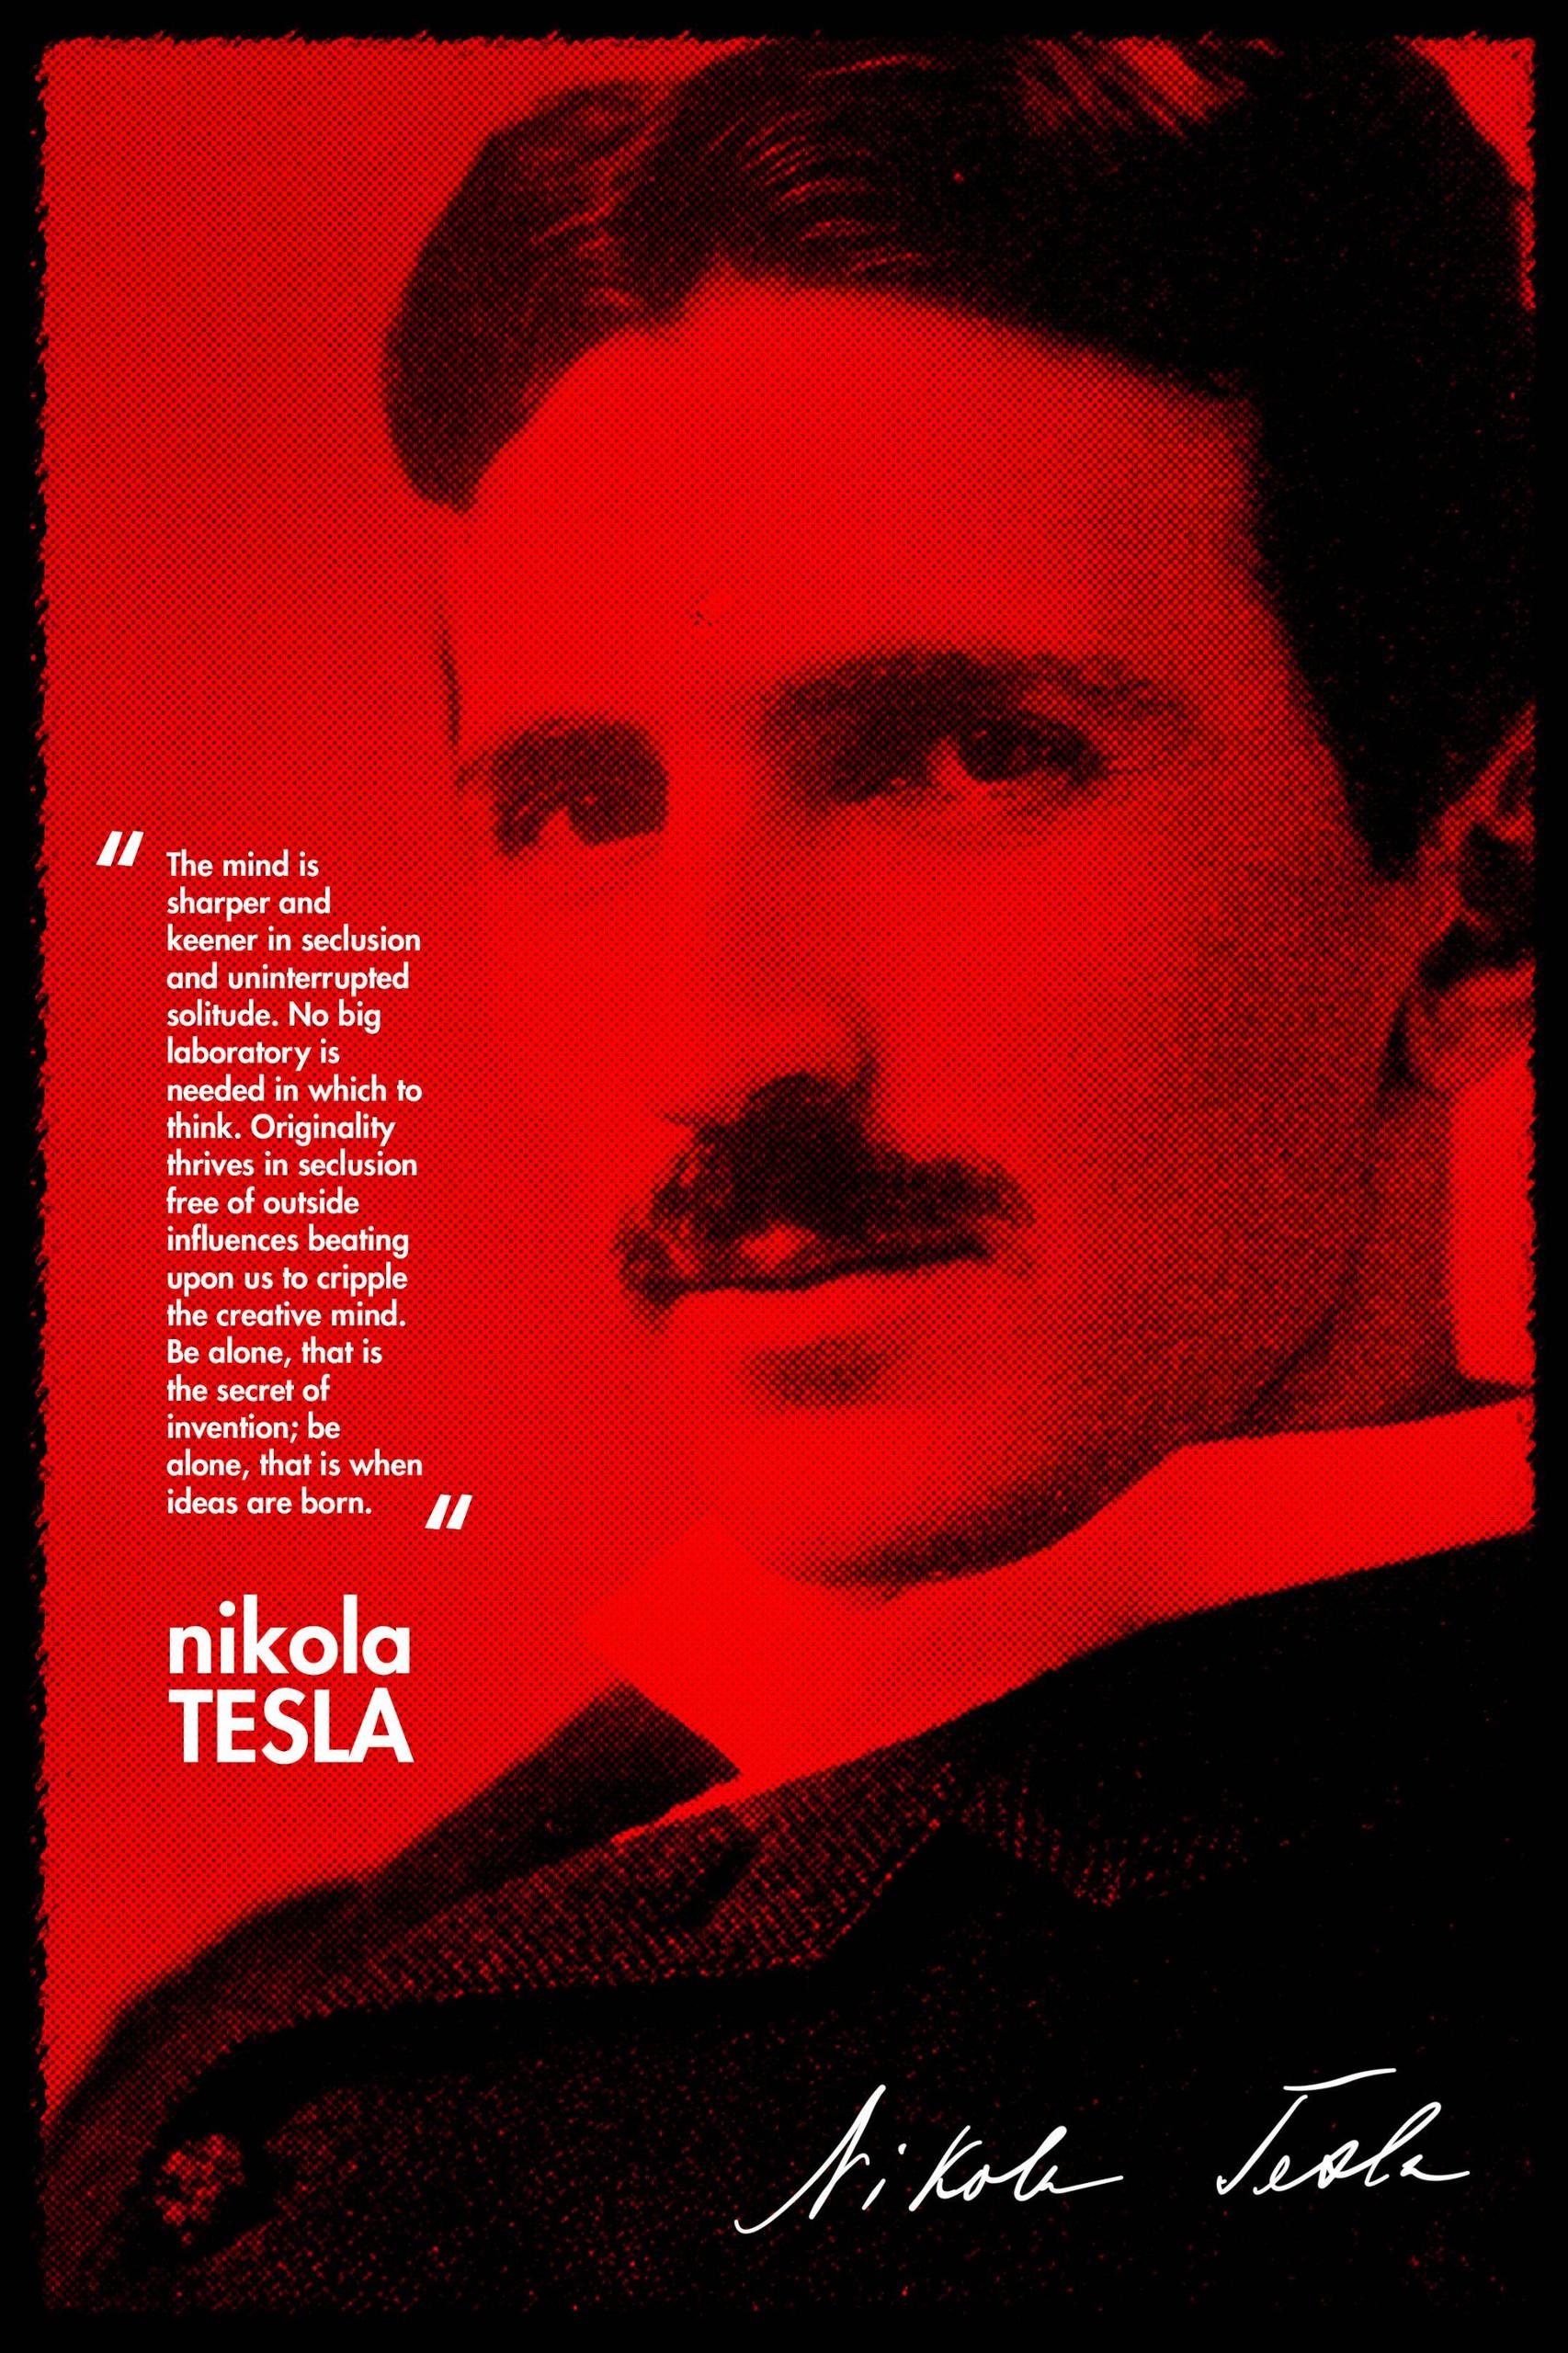 nikola tesla wallpaper hd,manifesto,rosso,testo,copertina,film